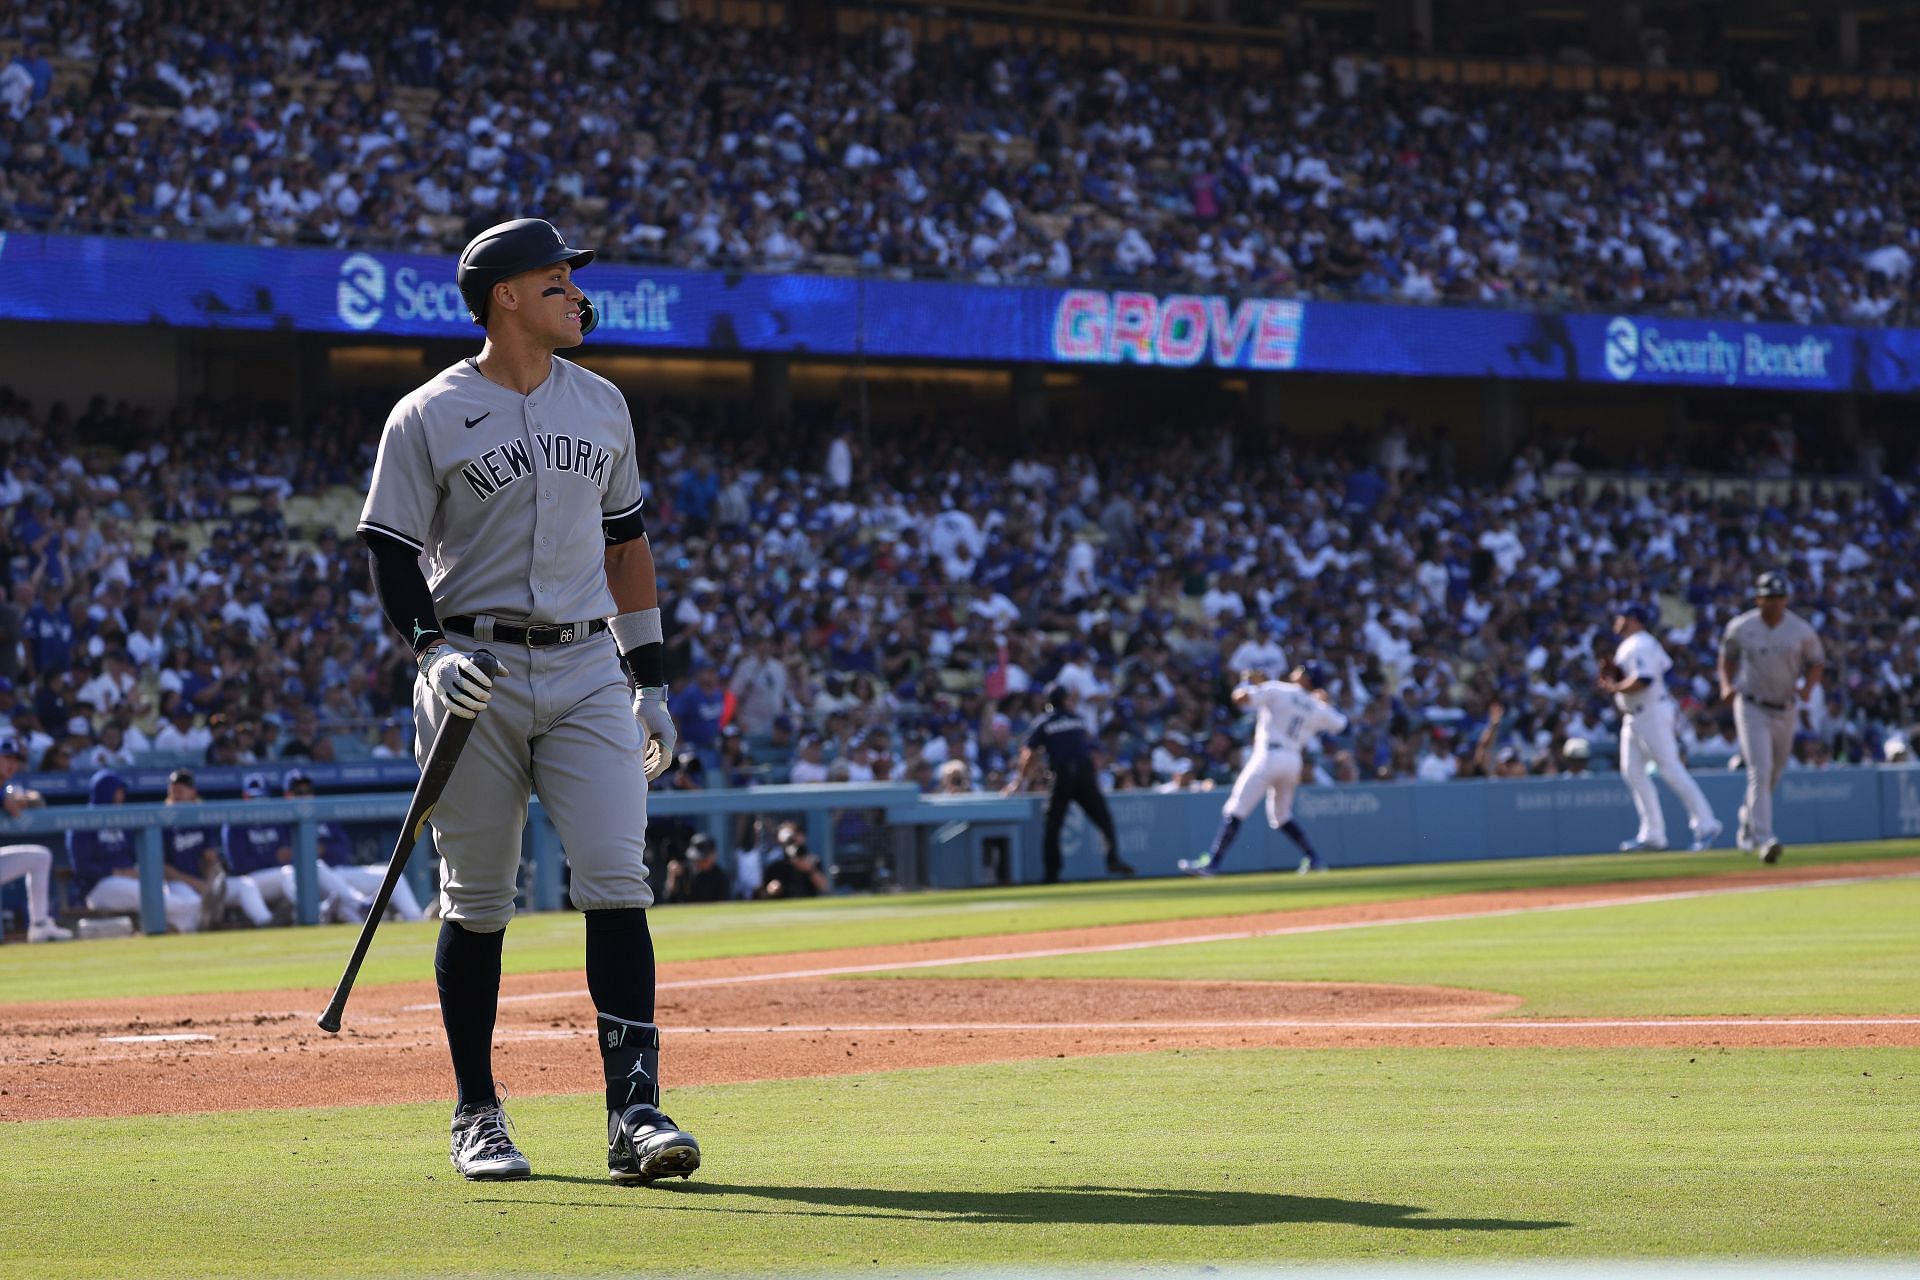 Nestor Cortes takes no-hit bid into 8th as Yankees nab another series, 1-0  - The Boston Globe